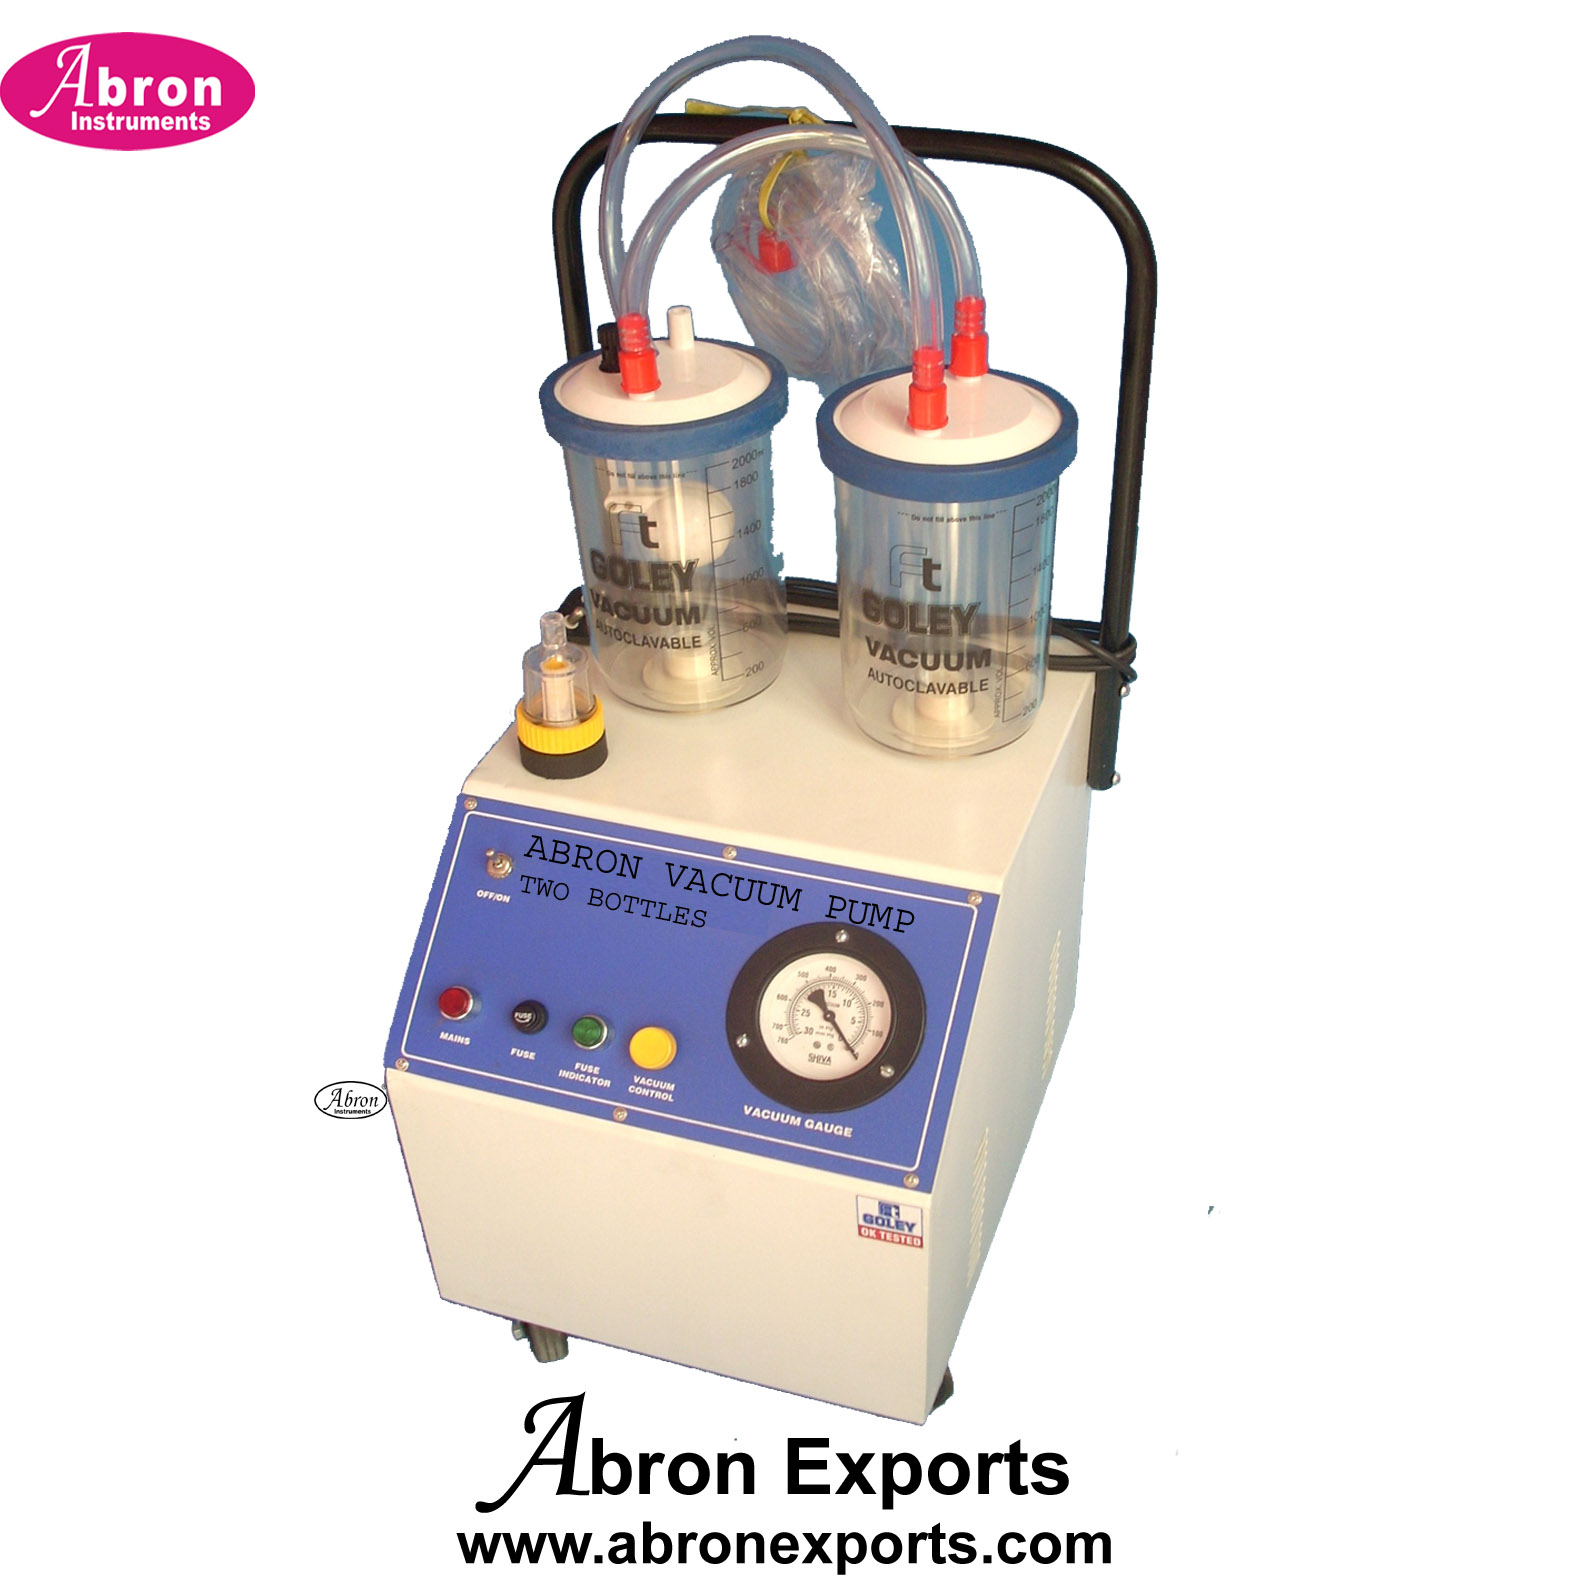 Suction machine with glass bottles vacuum pump tubes portable abron ABD-4190A  AB-2312A